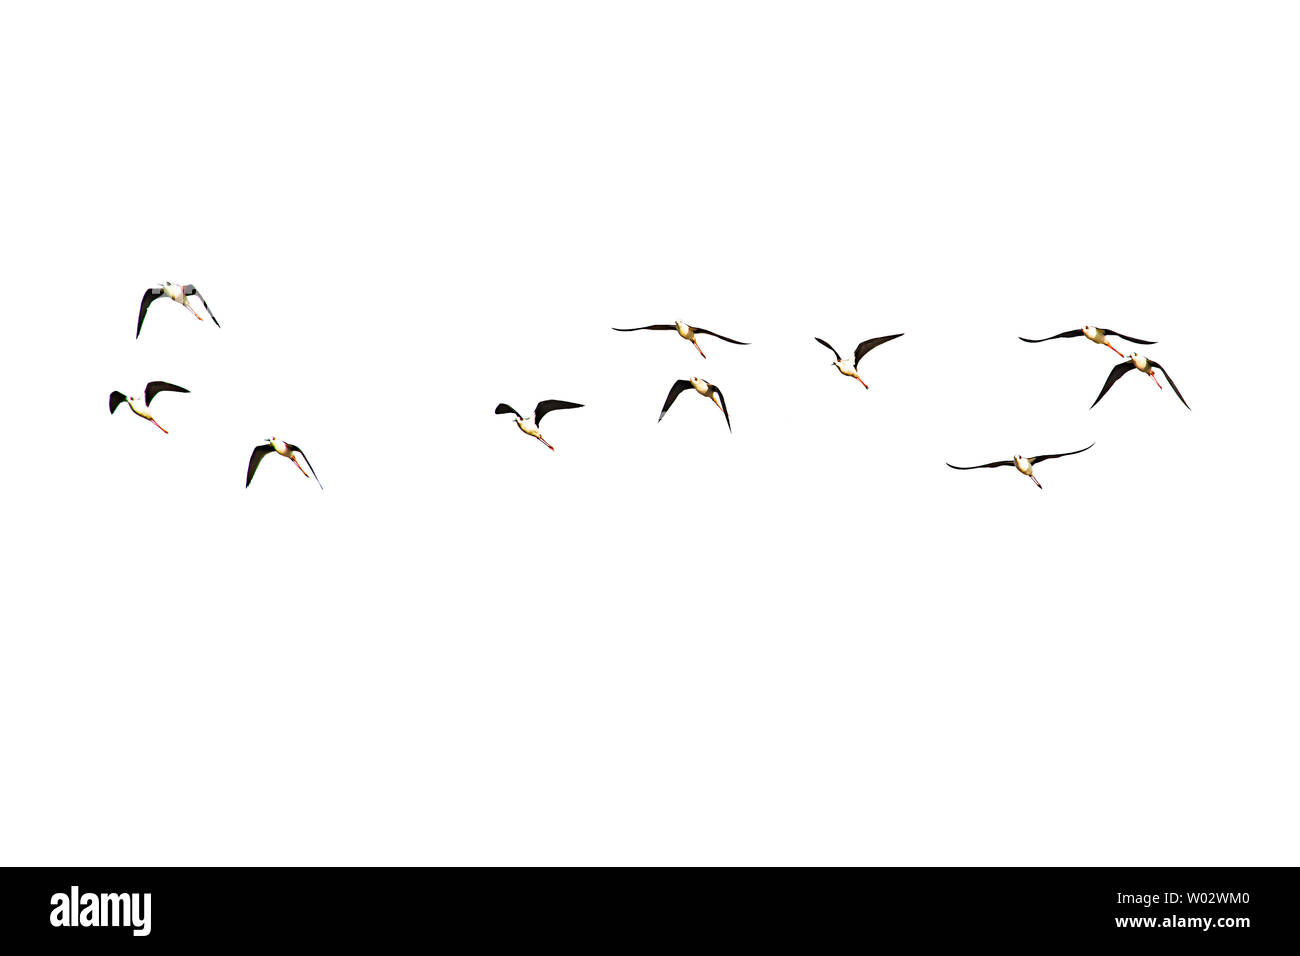 Isolated Flocks of birds flying on a white background. Stock Photo